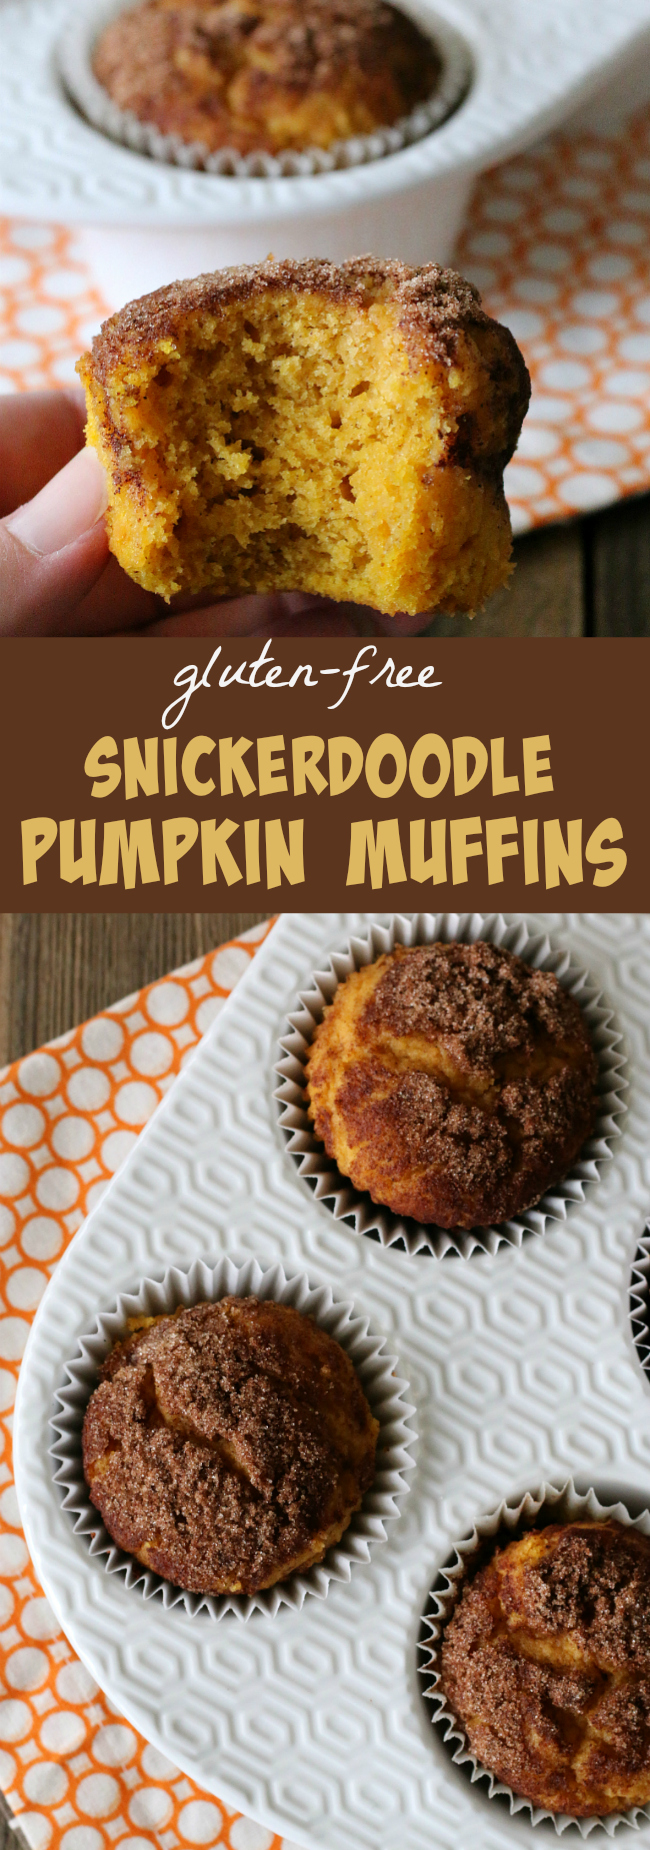 Gluten-free Snickerdoodle Pumpkin Muffins Recipe yummy and easy! My favorite pumpkin muffins ever! 